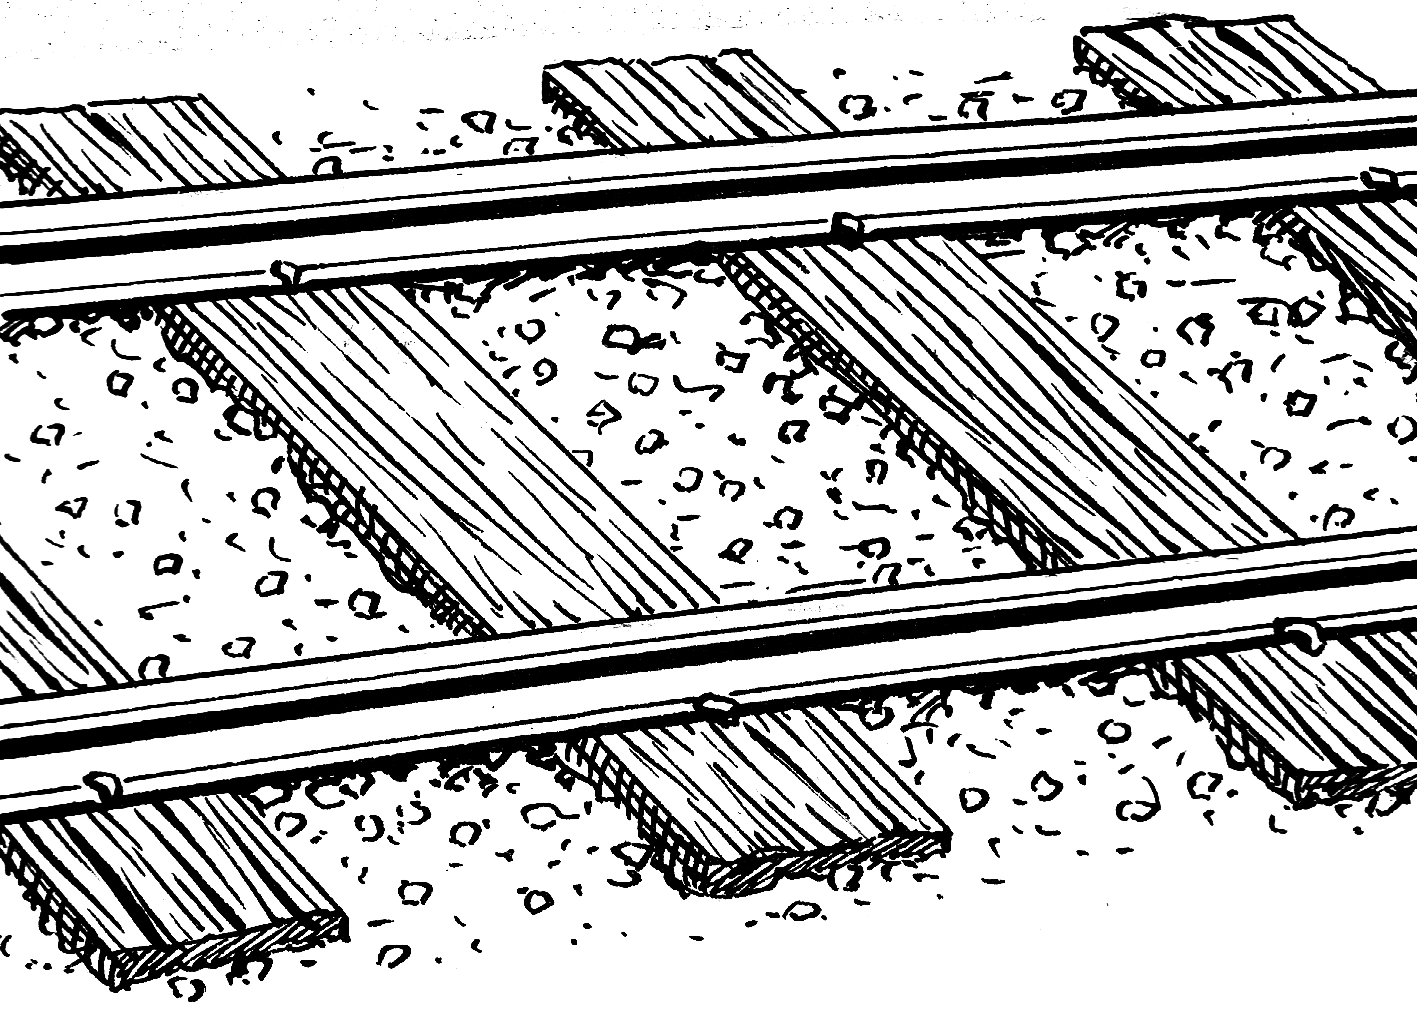 Как нарисовать железную дорогу карандашом